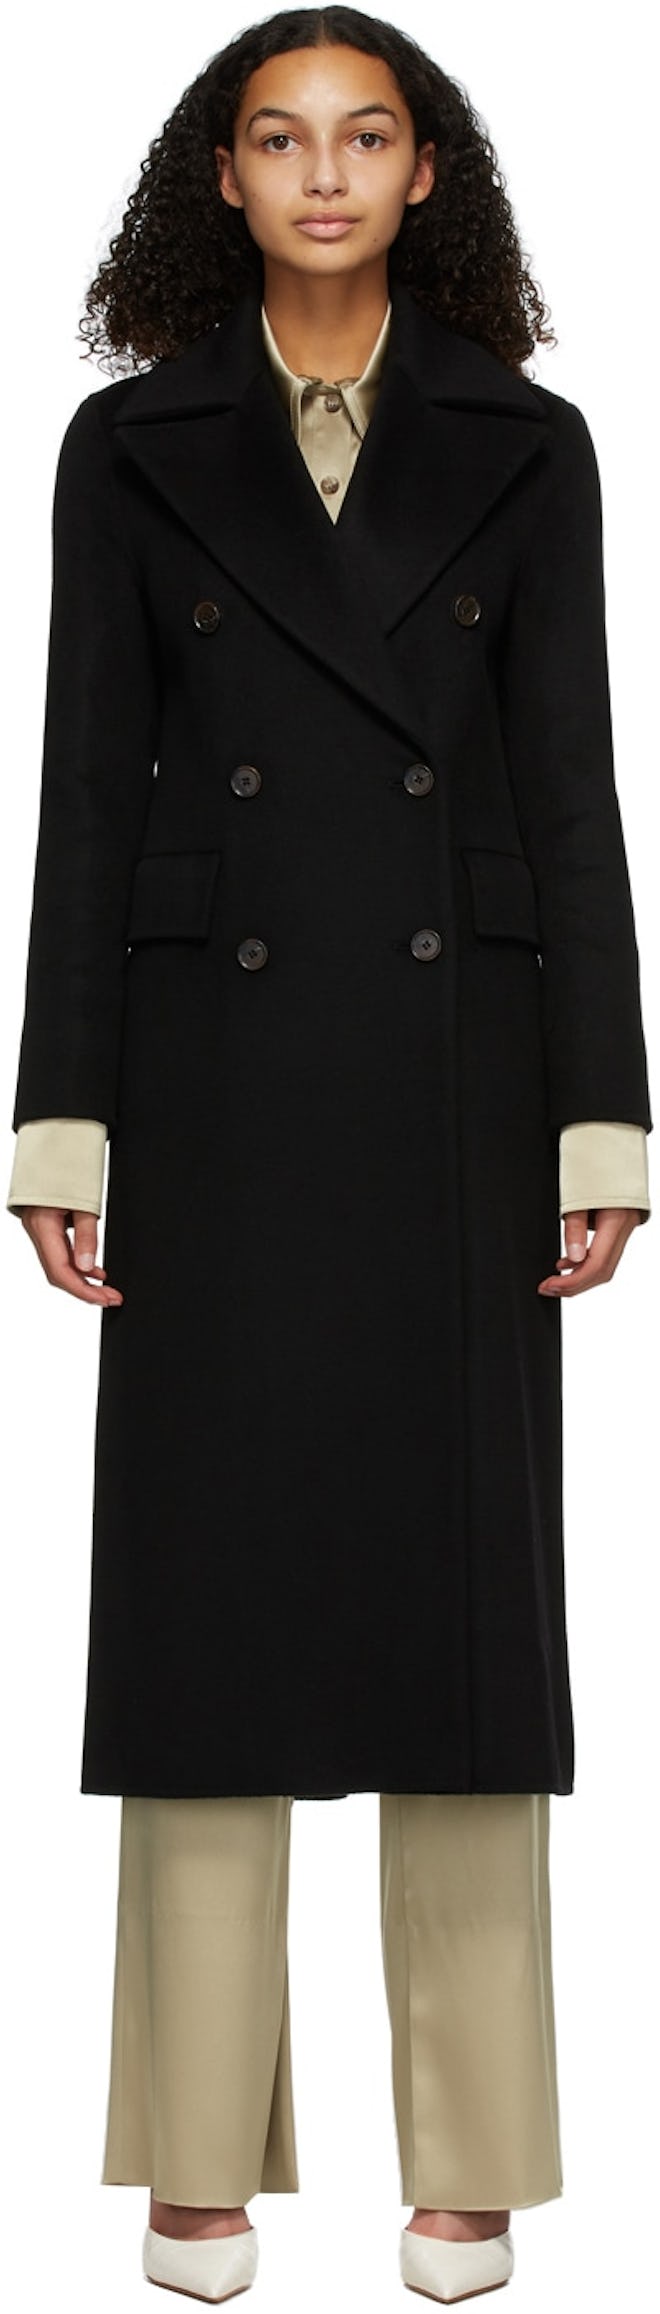 Black Wool Lana Coat